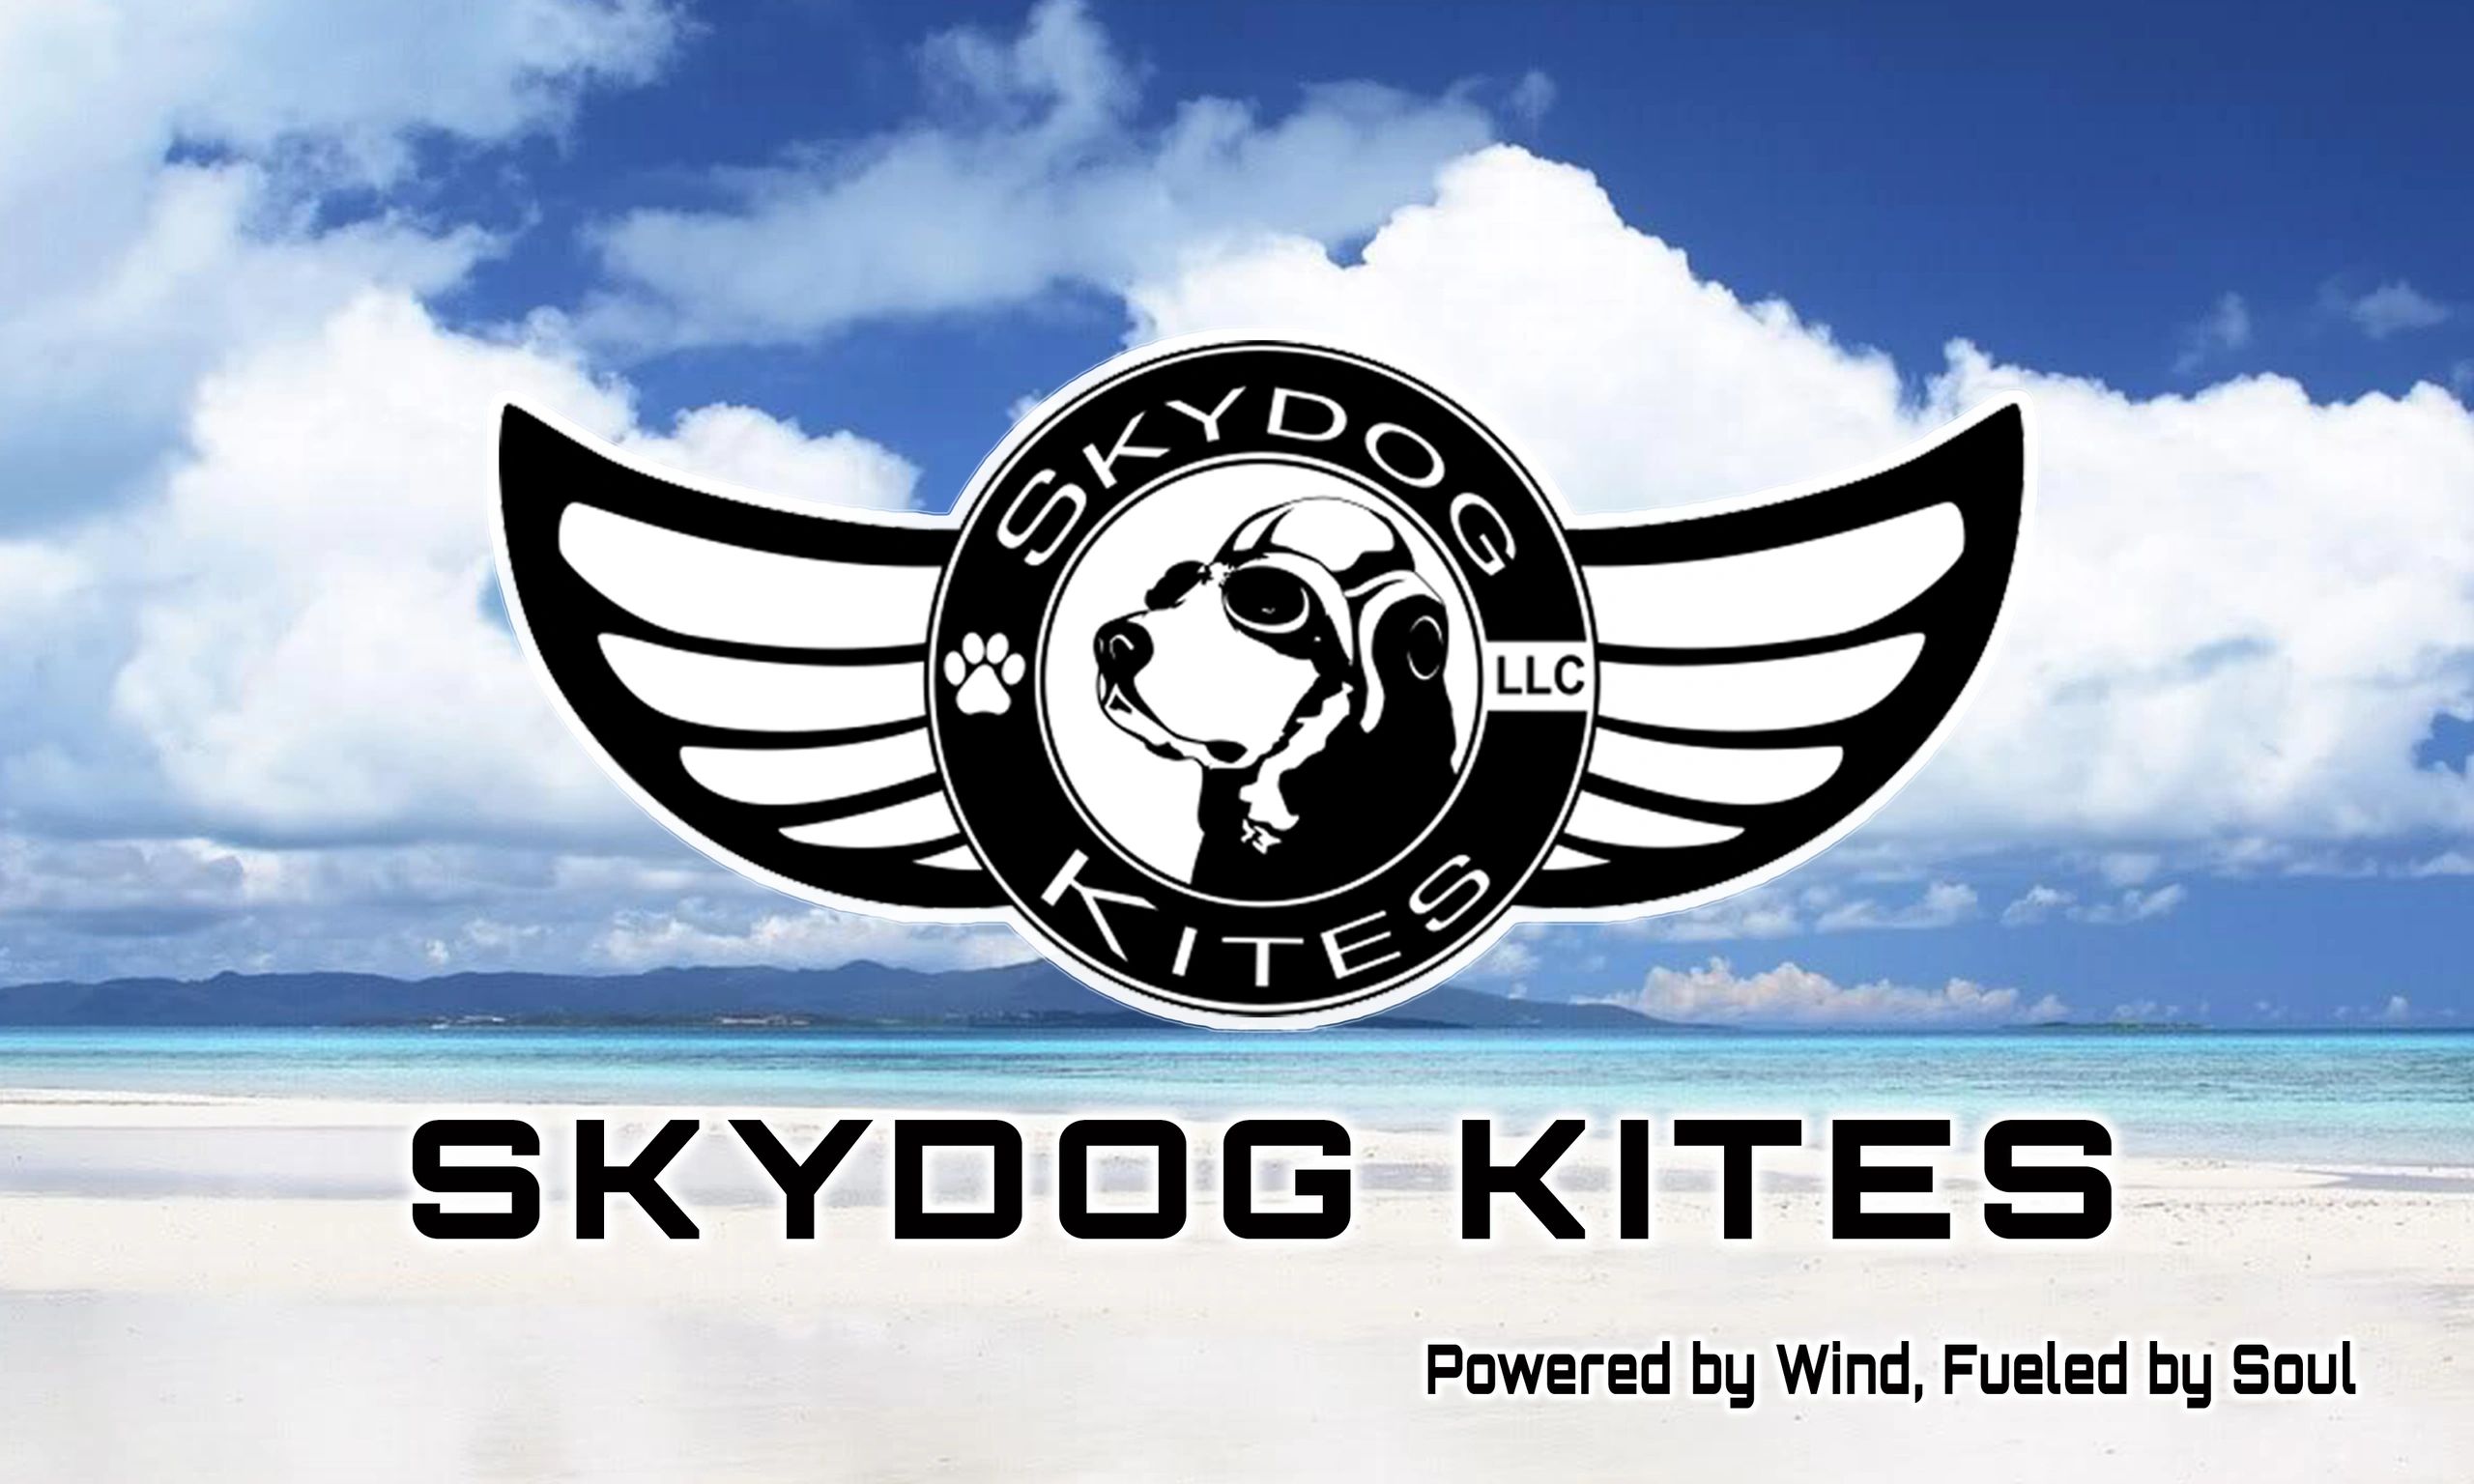 (c) Skydogkites.com